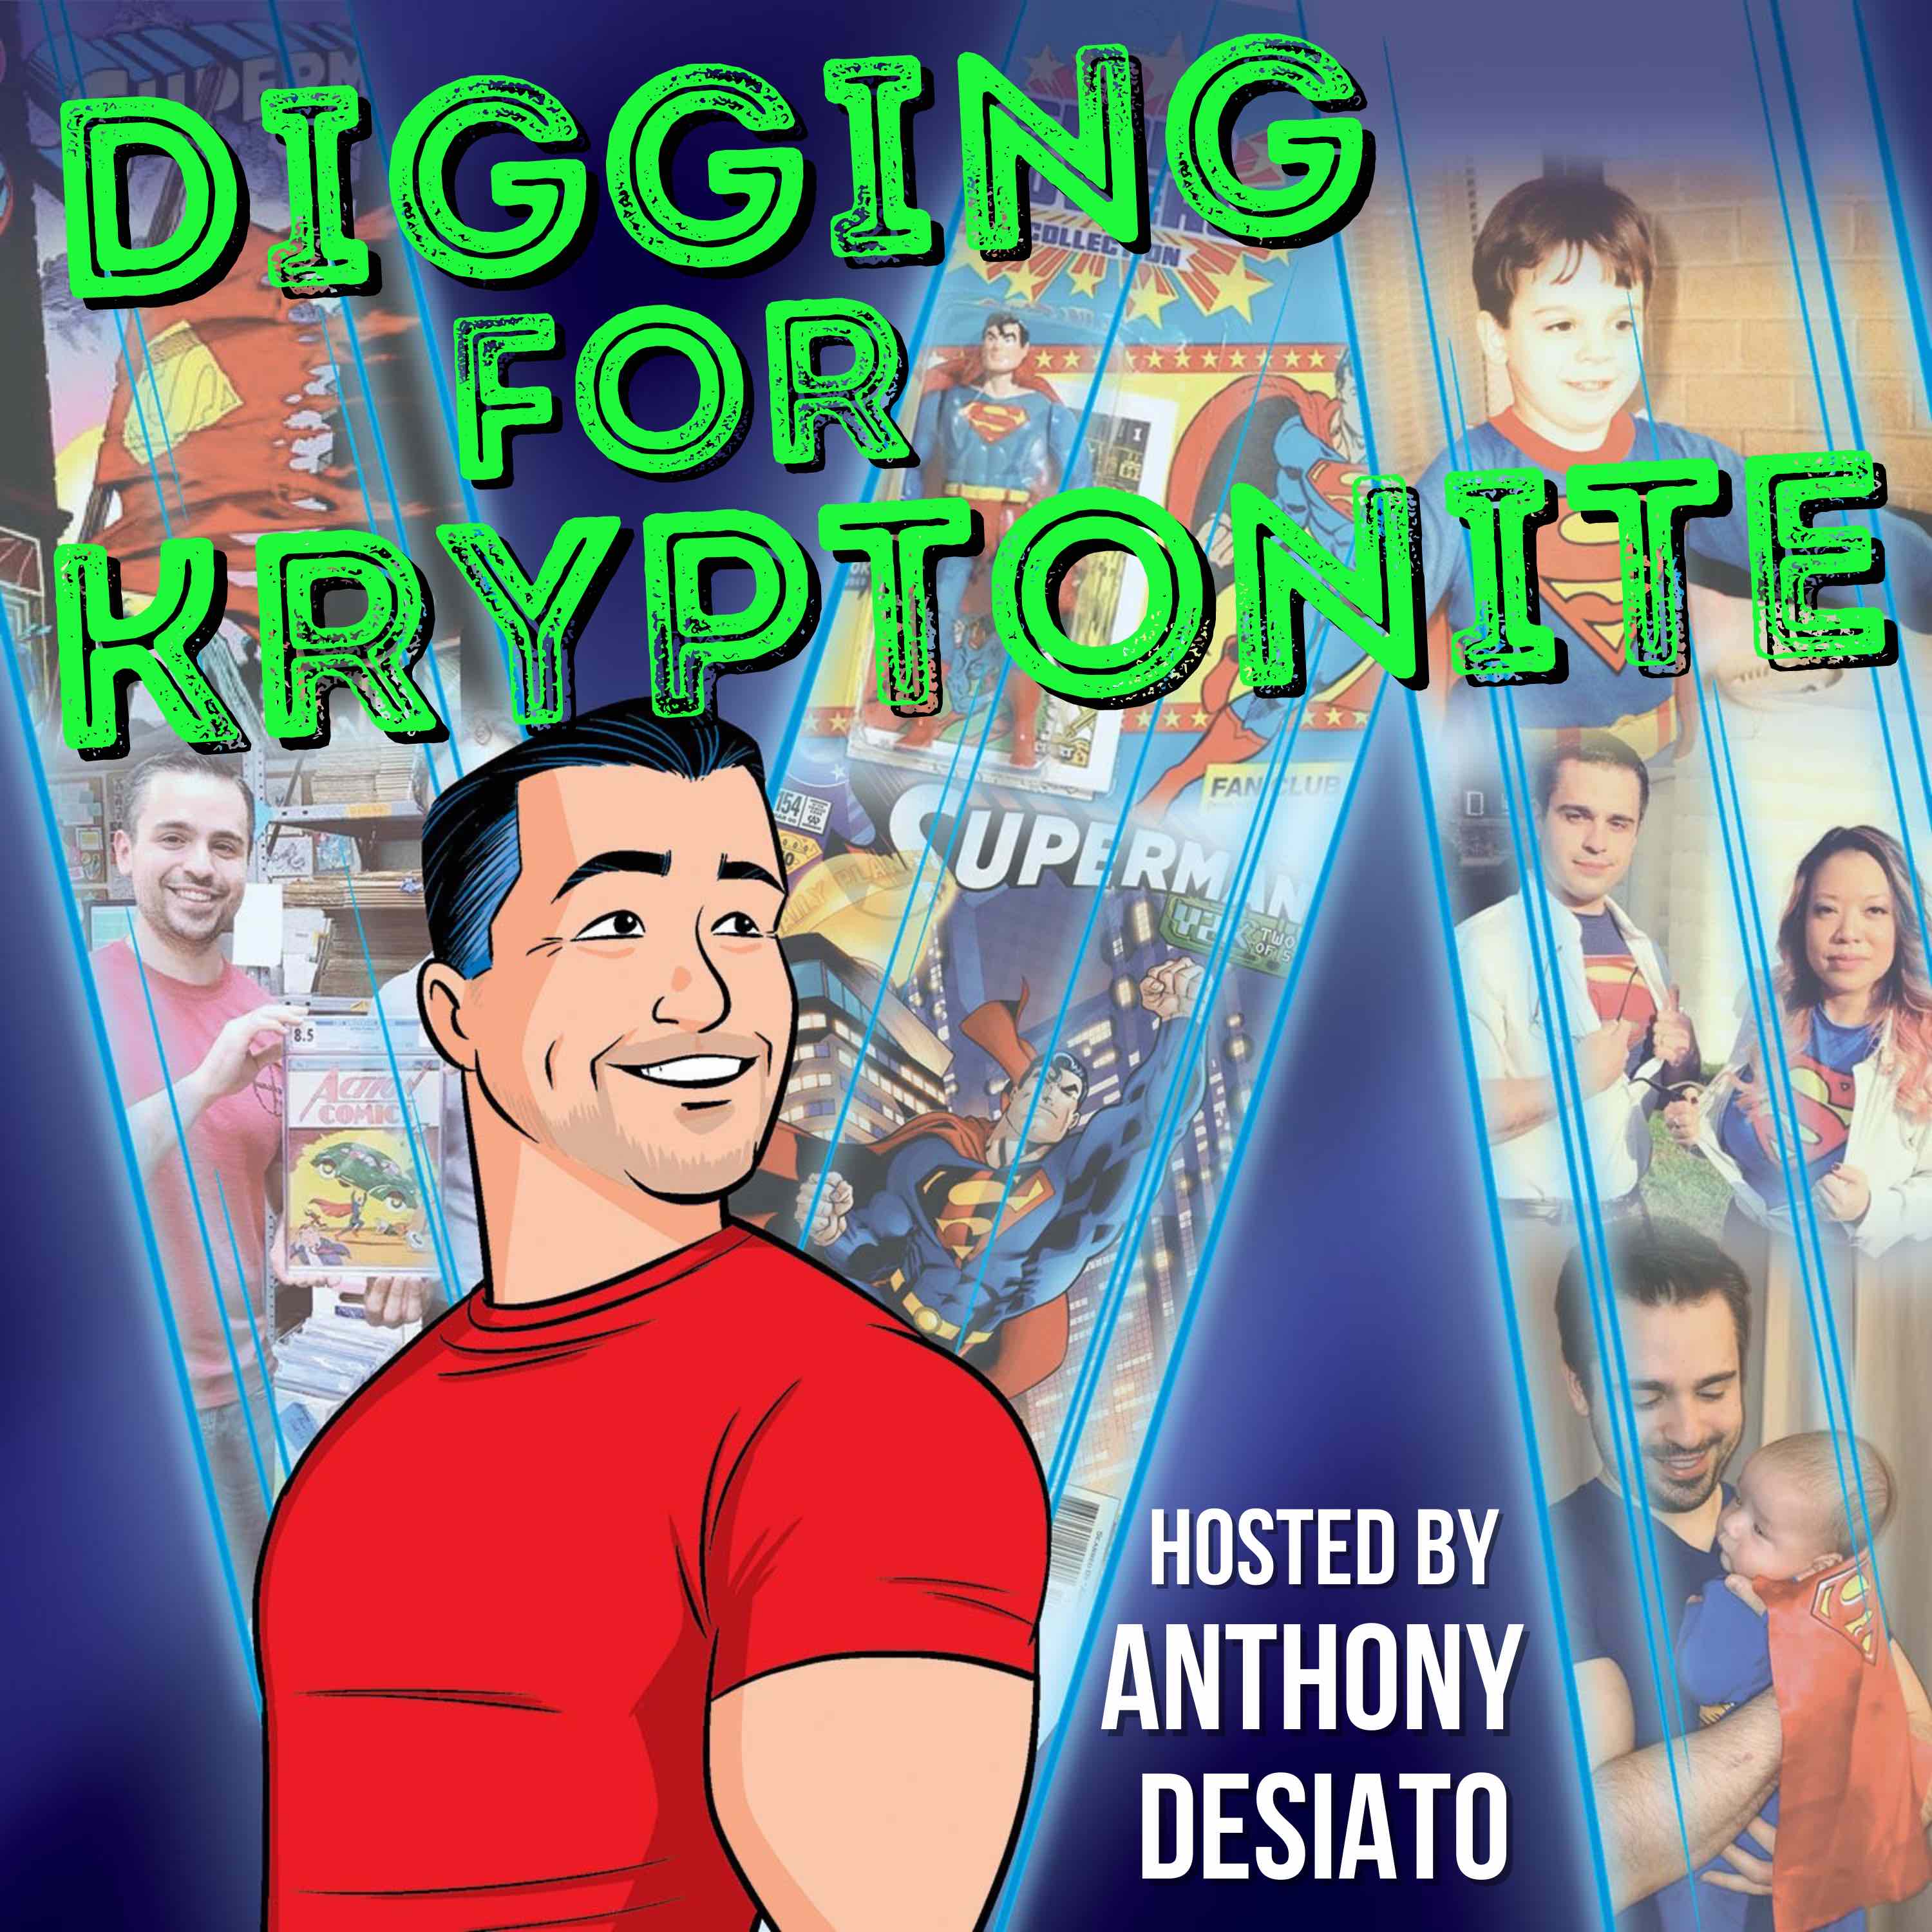 Show artwork for Digging for Kryptonite: A Superman Fan Journey